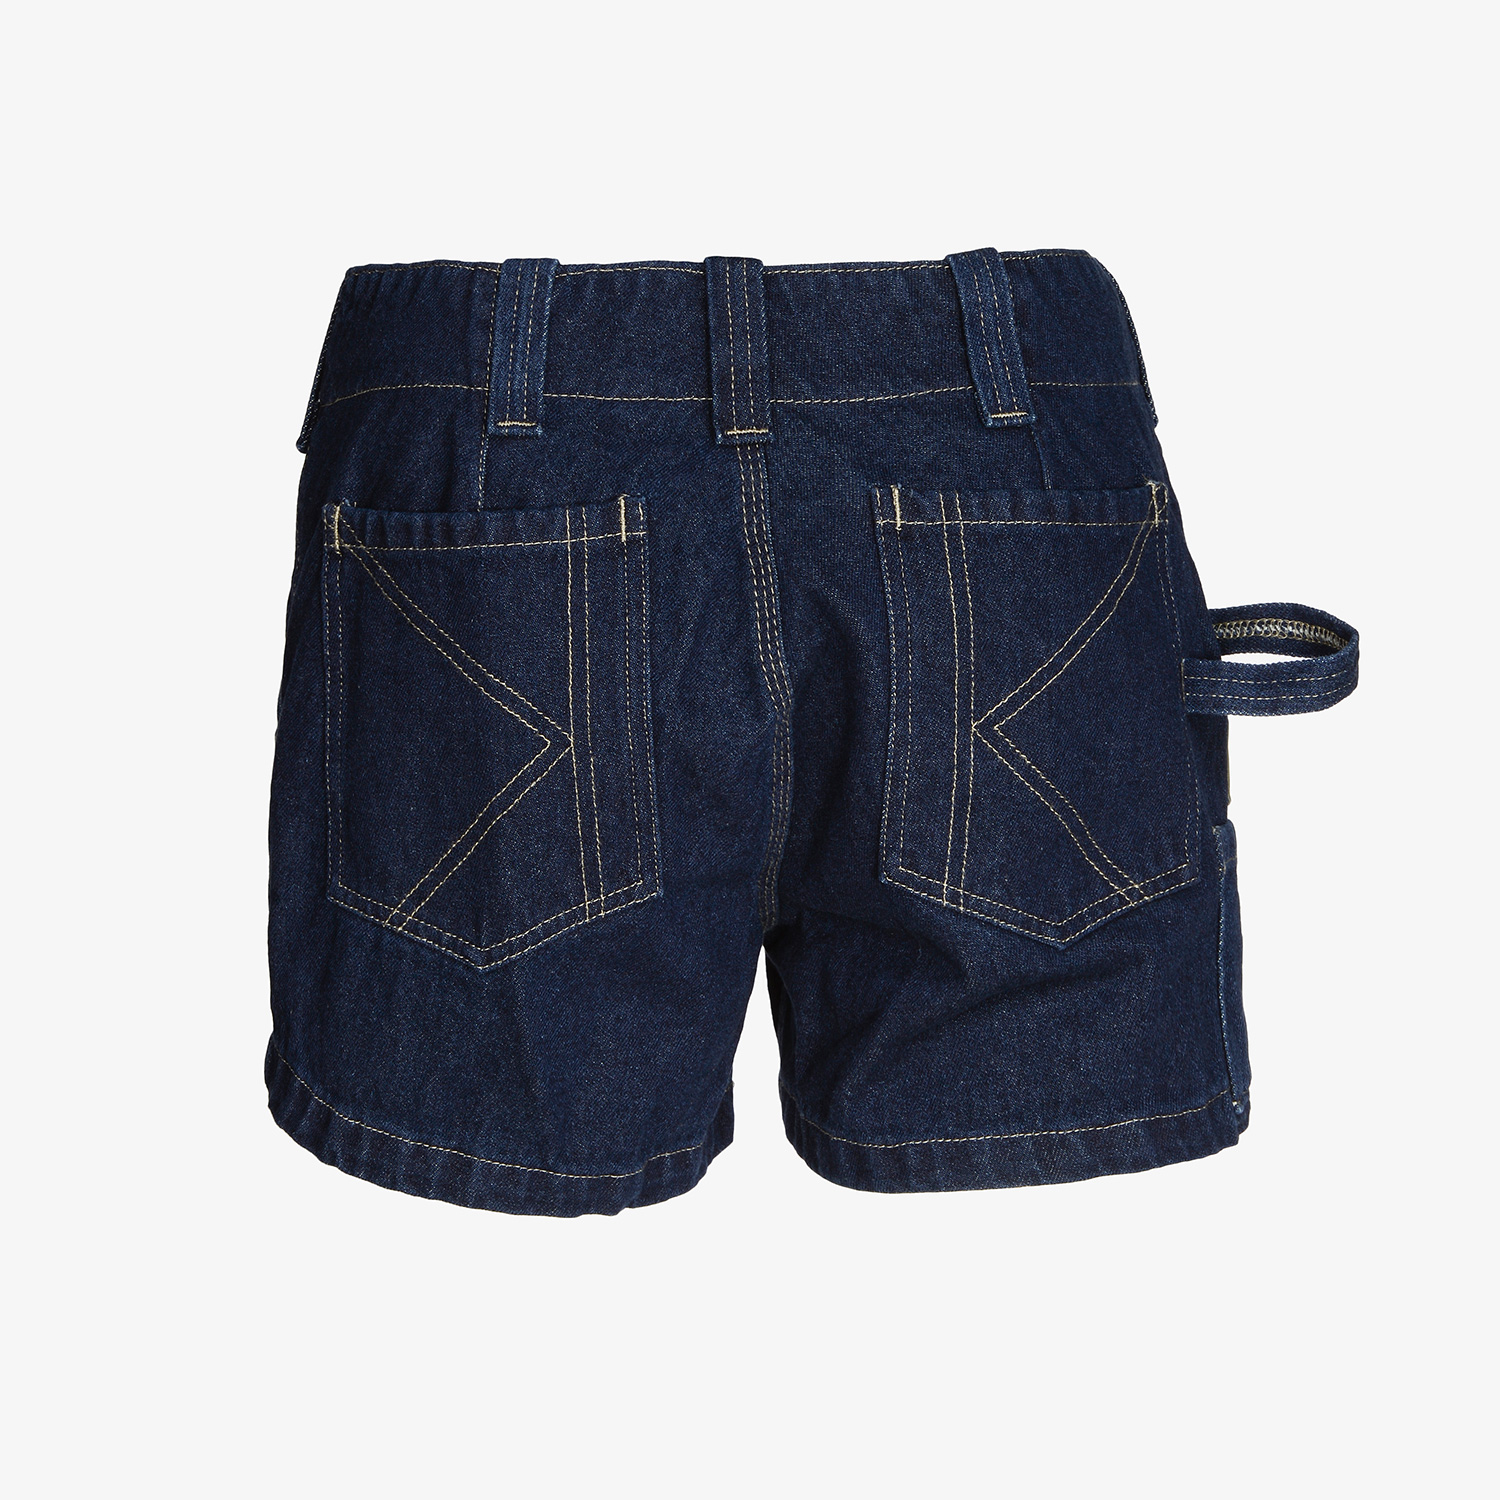 KRÄHE Jeans short